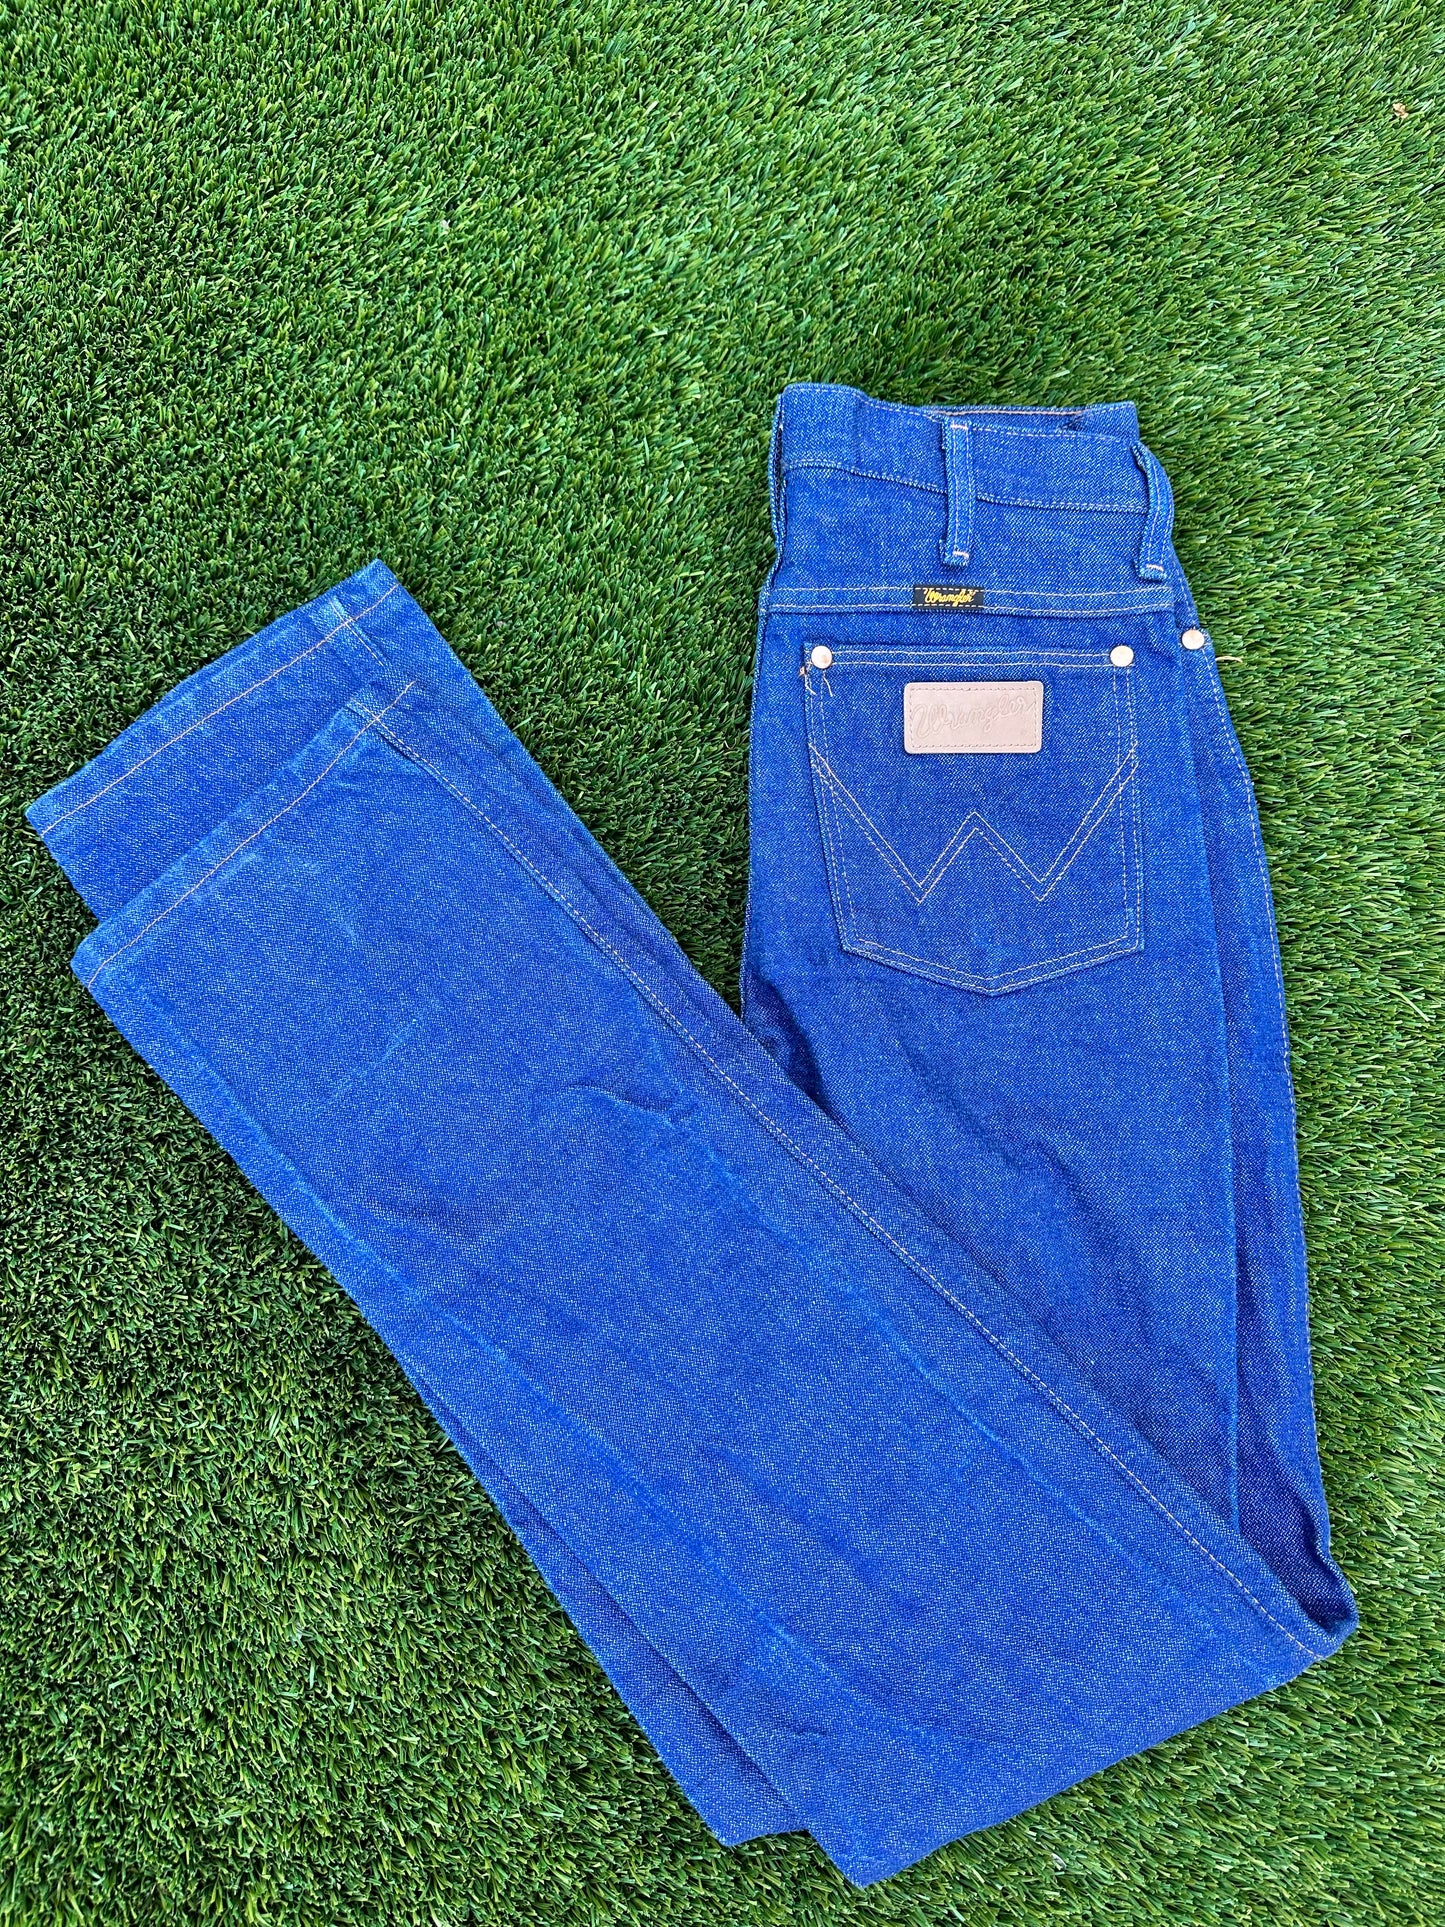 THE GET DOWN: BoBo’s Wrangler Vintage Blue Denim Jeans (29/34)